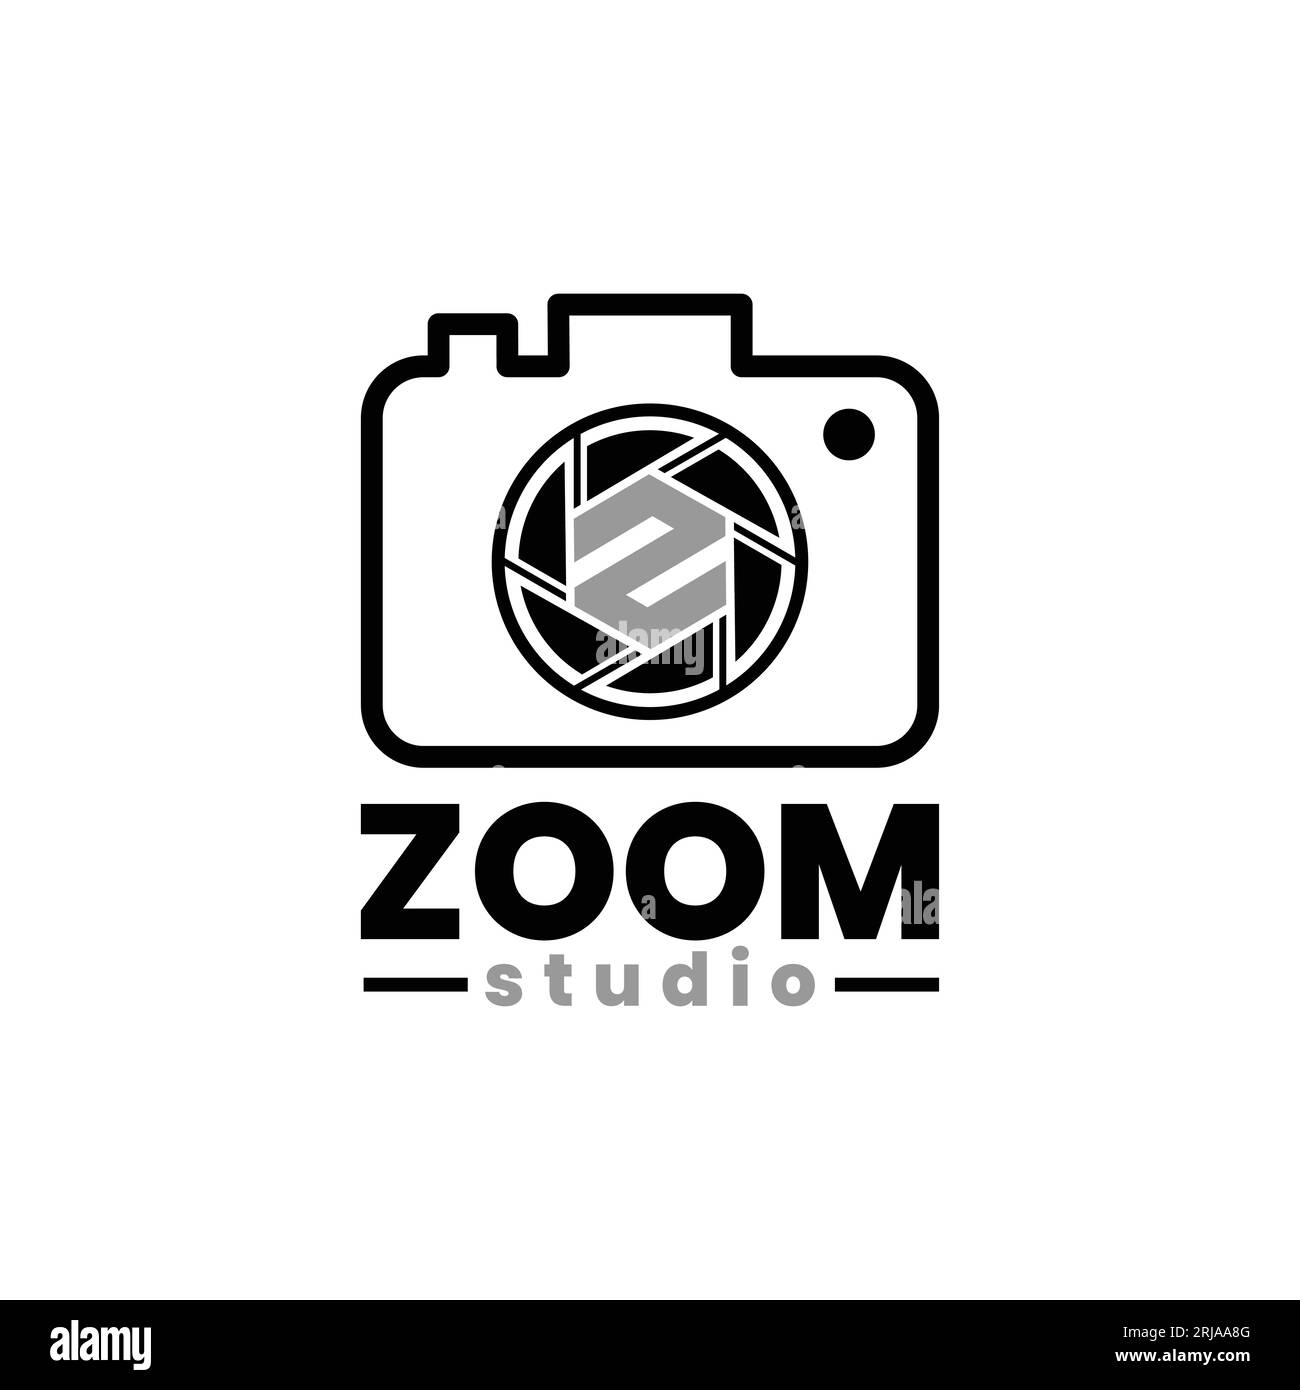 Initials Letter Z on Camera Lens Logo For Photography Photographer Studio Photo Design Inspiration Stock Vector